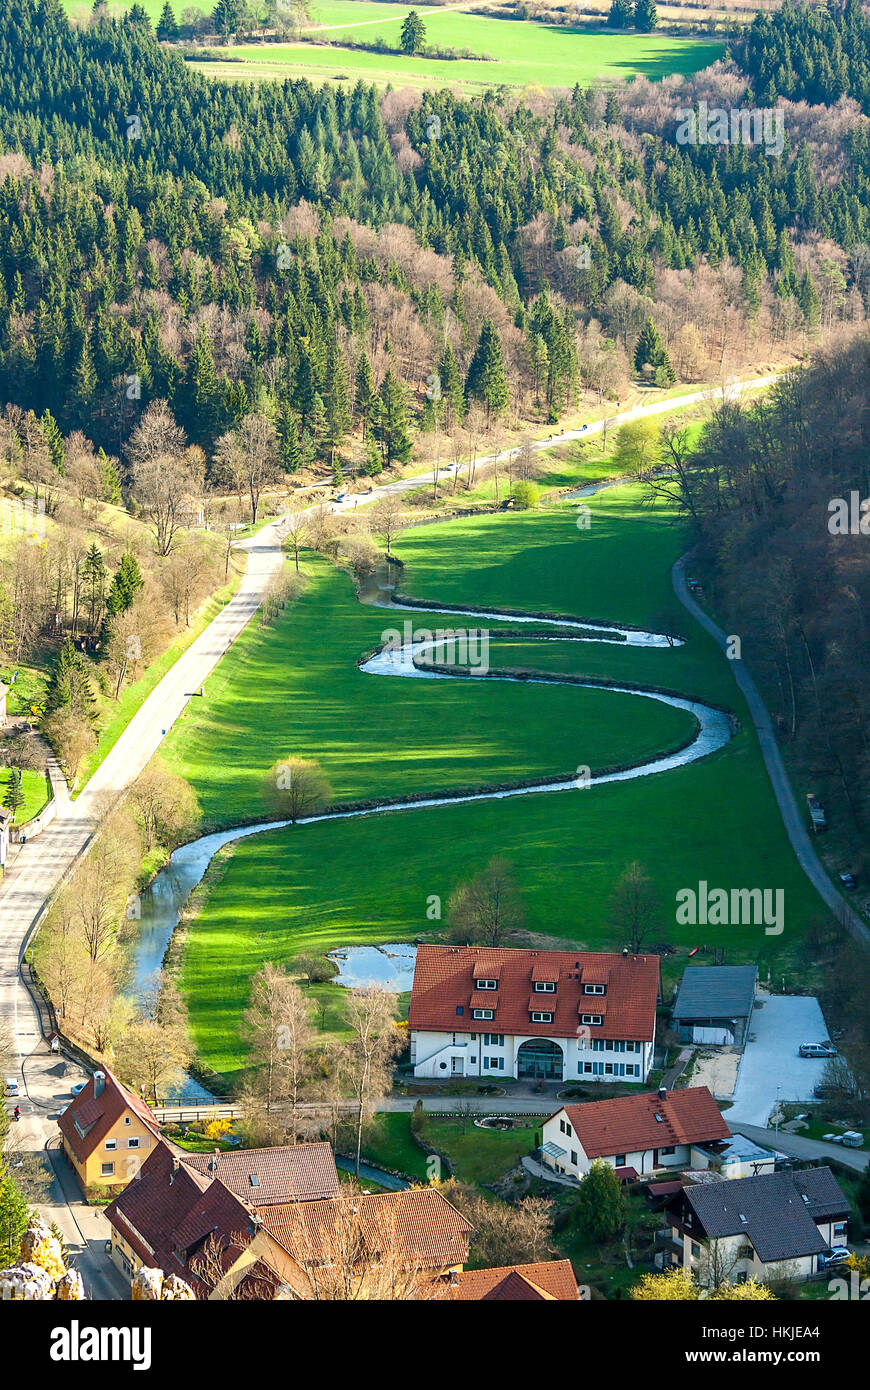 Meander of the Lauter River in the Grosses Lautertal Valley near Gundelfingen, Swabian Alb, Germany. Stock Photo